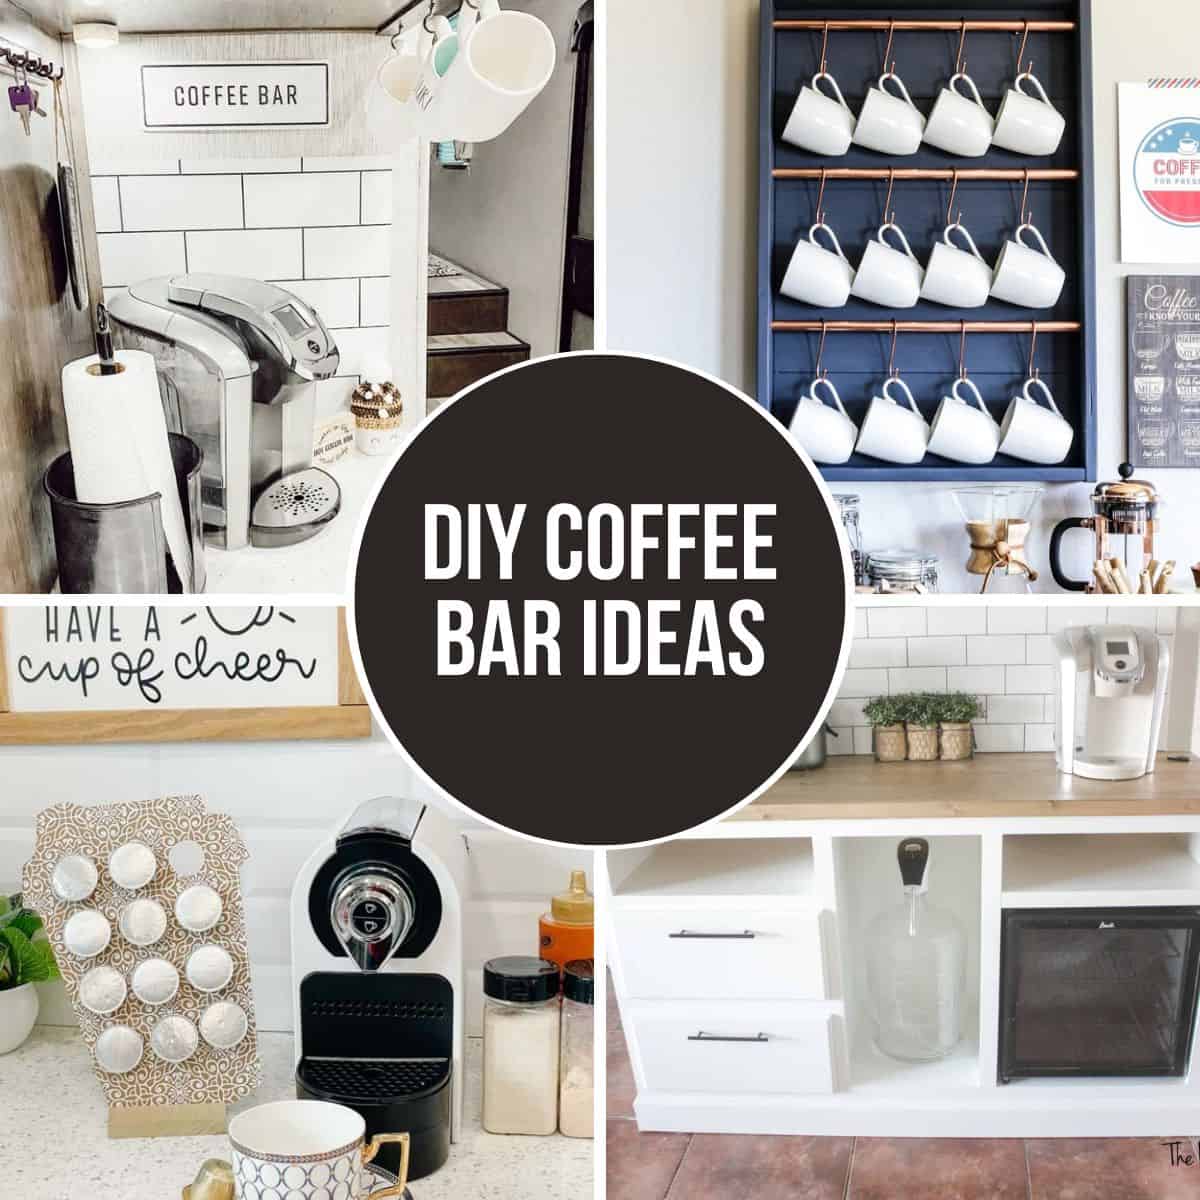 Farmhouse Coffee Bar Ideas: Inspiration and Shopping